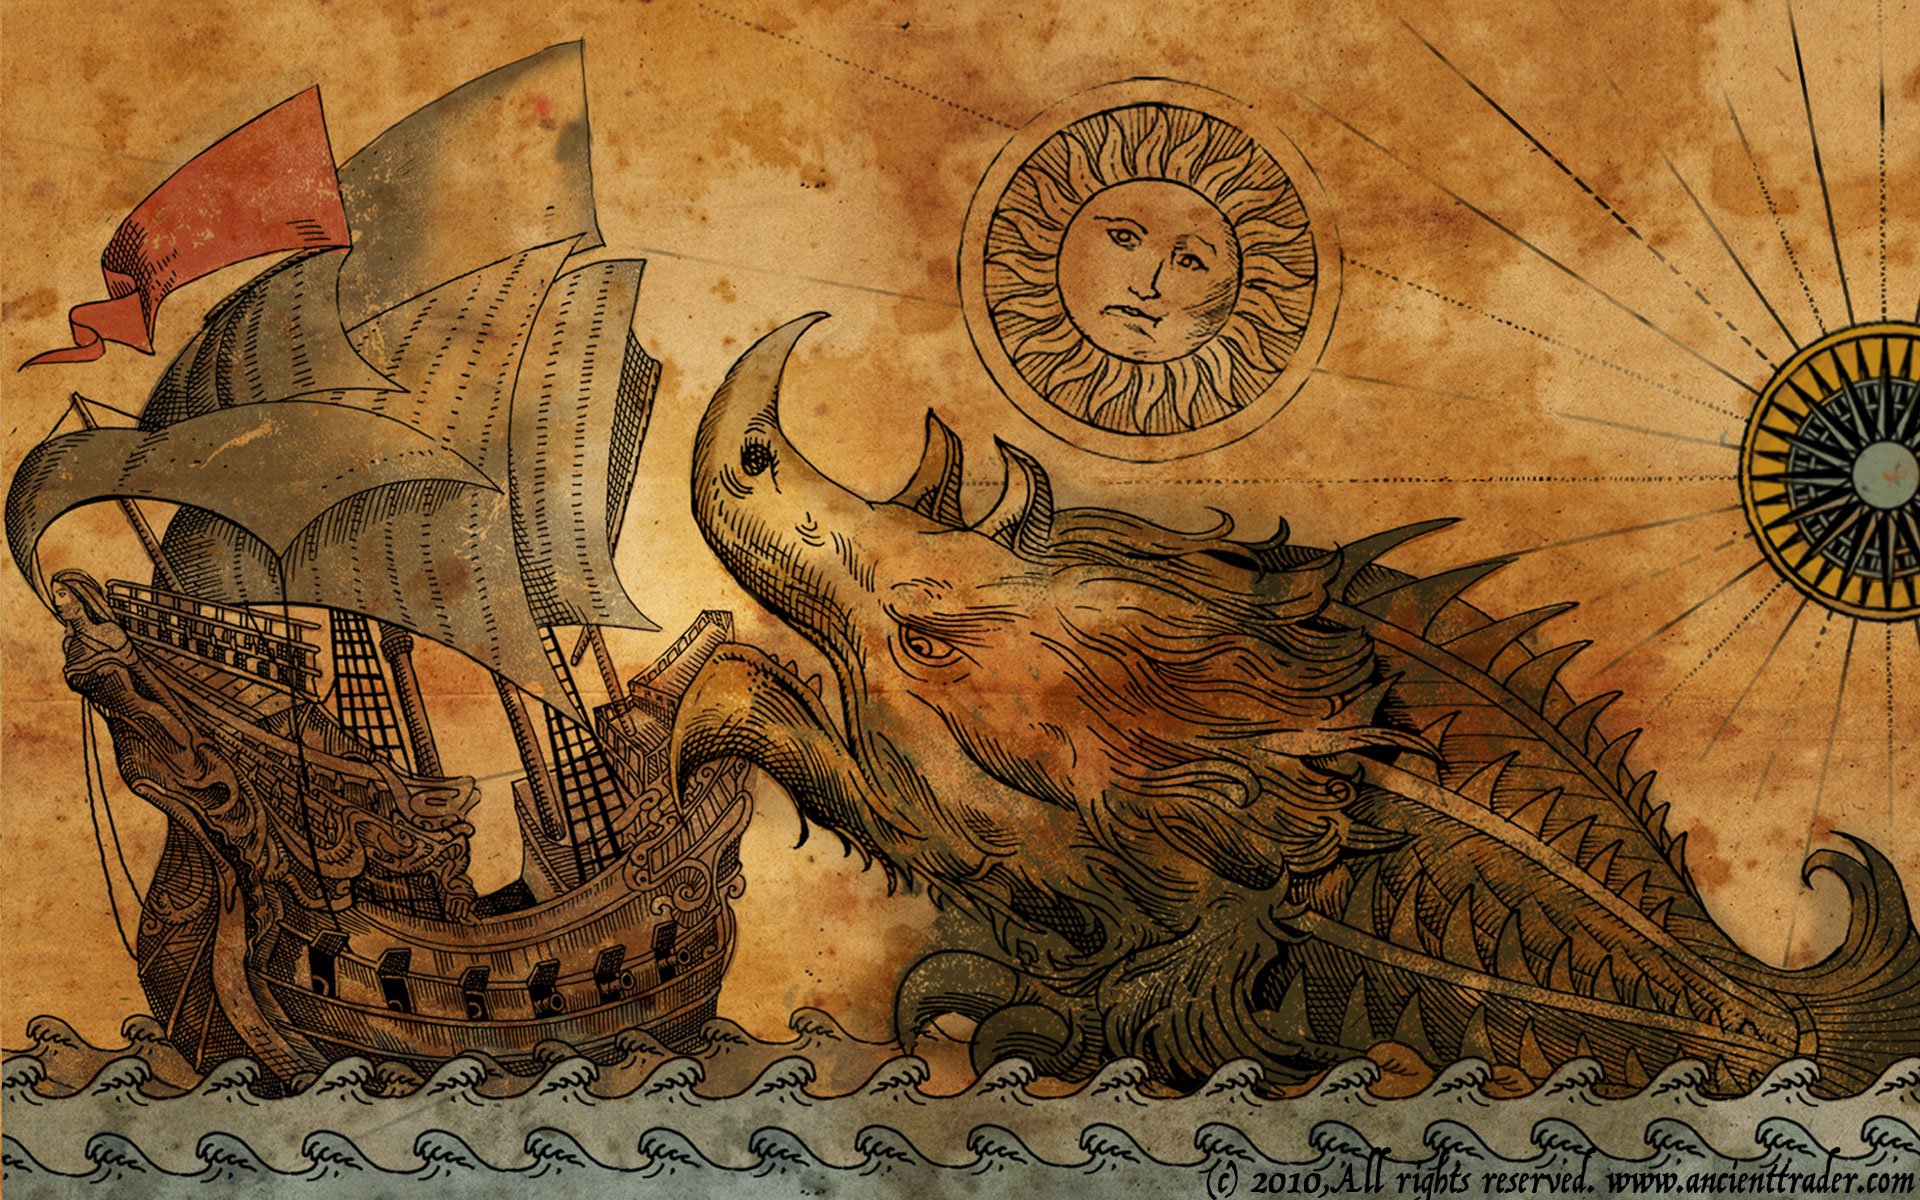 monsters, ships, L., vehicles - desktop wallpaper